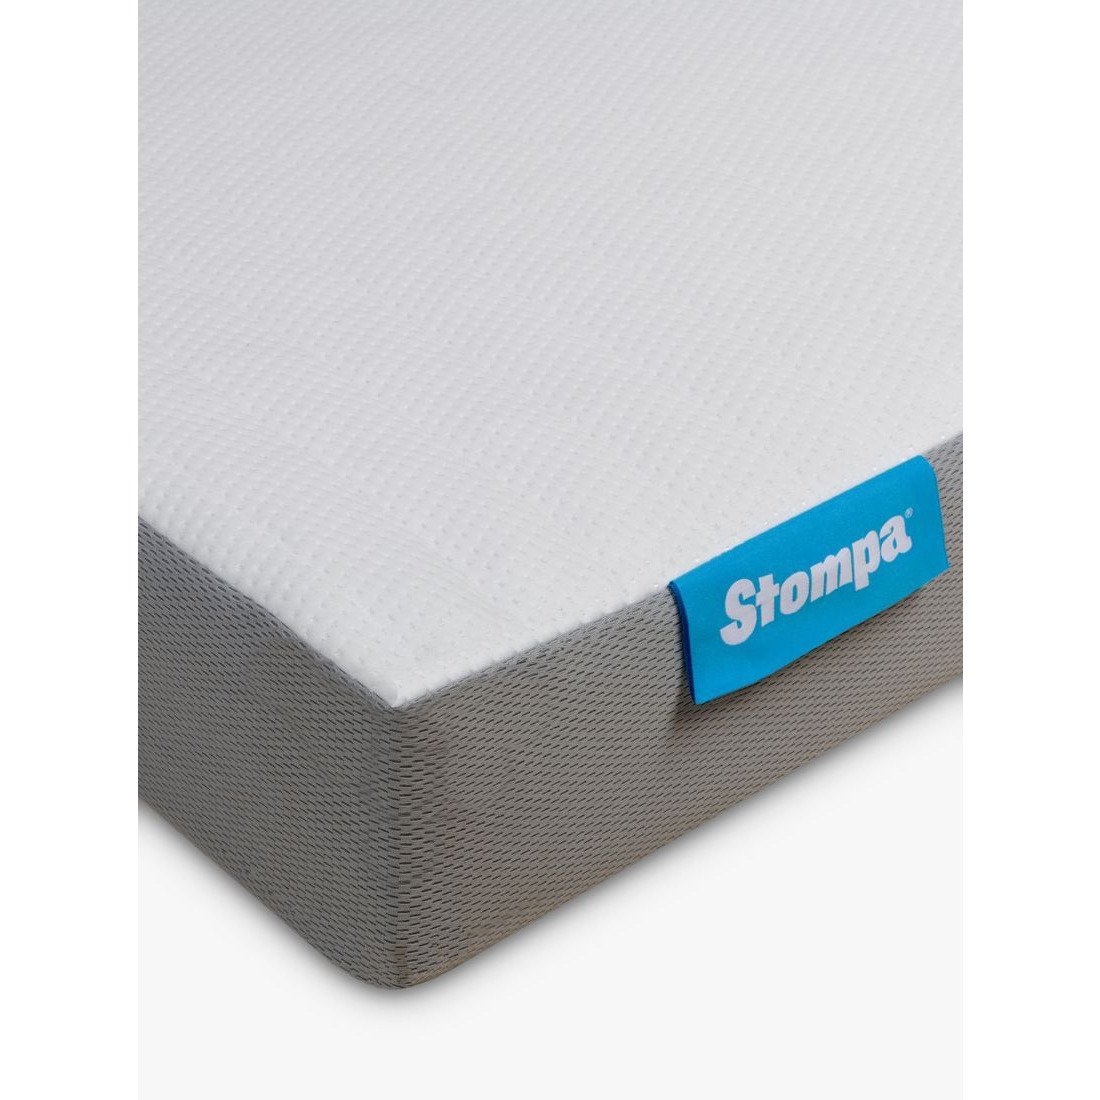 Stompa S Flex Airflow Mattress, Medium/Firm Tension, Small Double - image 1